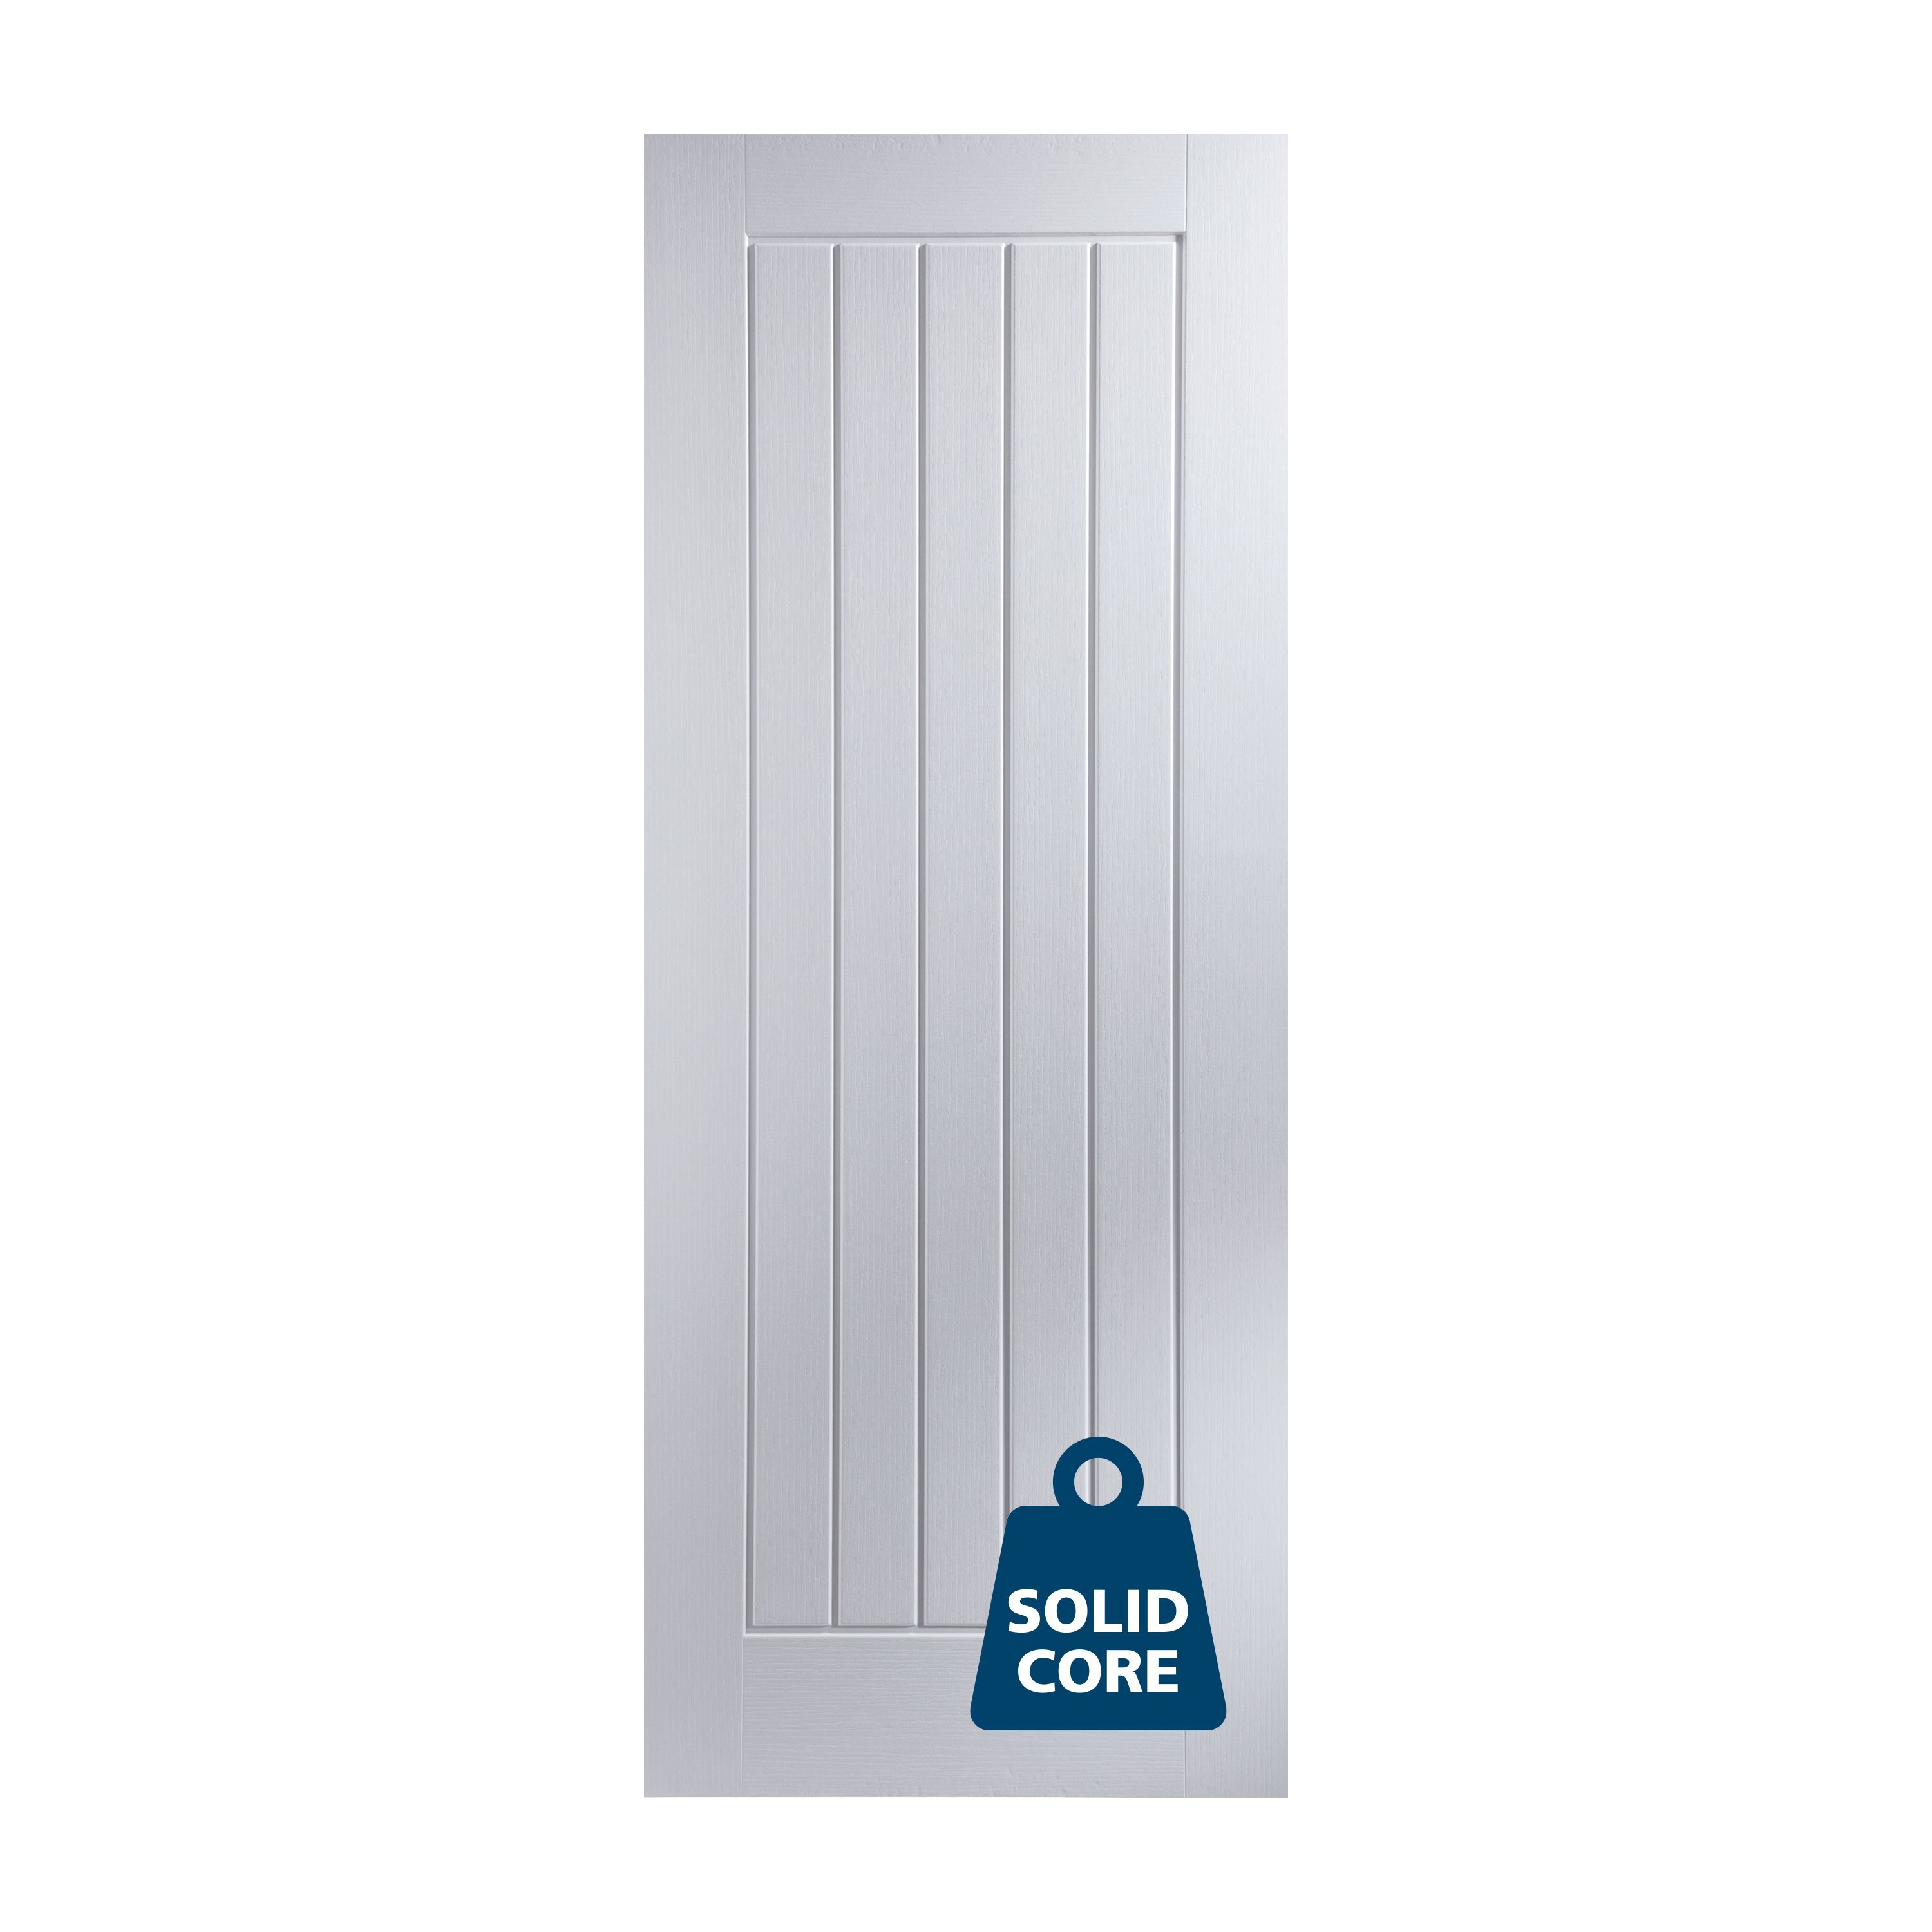 Jeld-Wen Cottage Solid core Unglazed Cottage White Woodgrain effect Internal Door, (H)1981mm (W)610mm (T)35mm